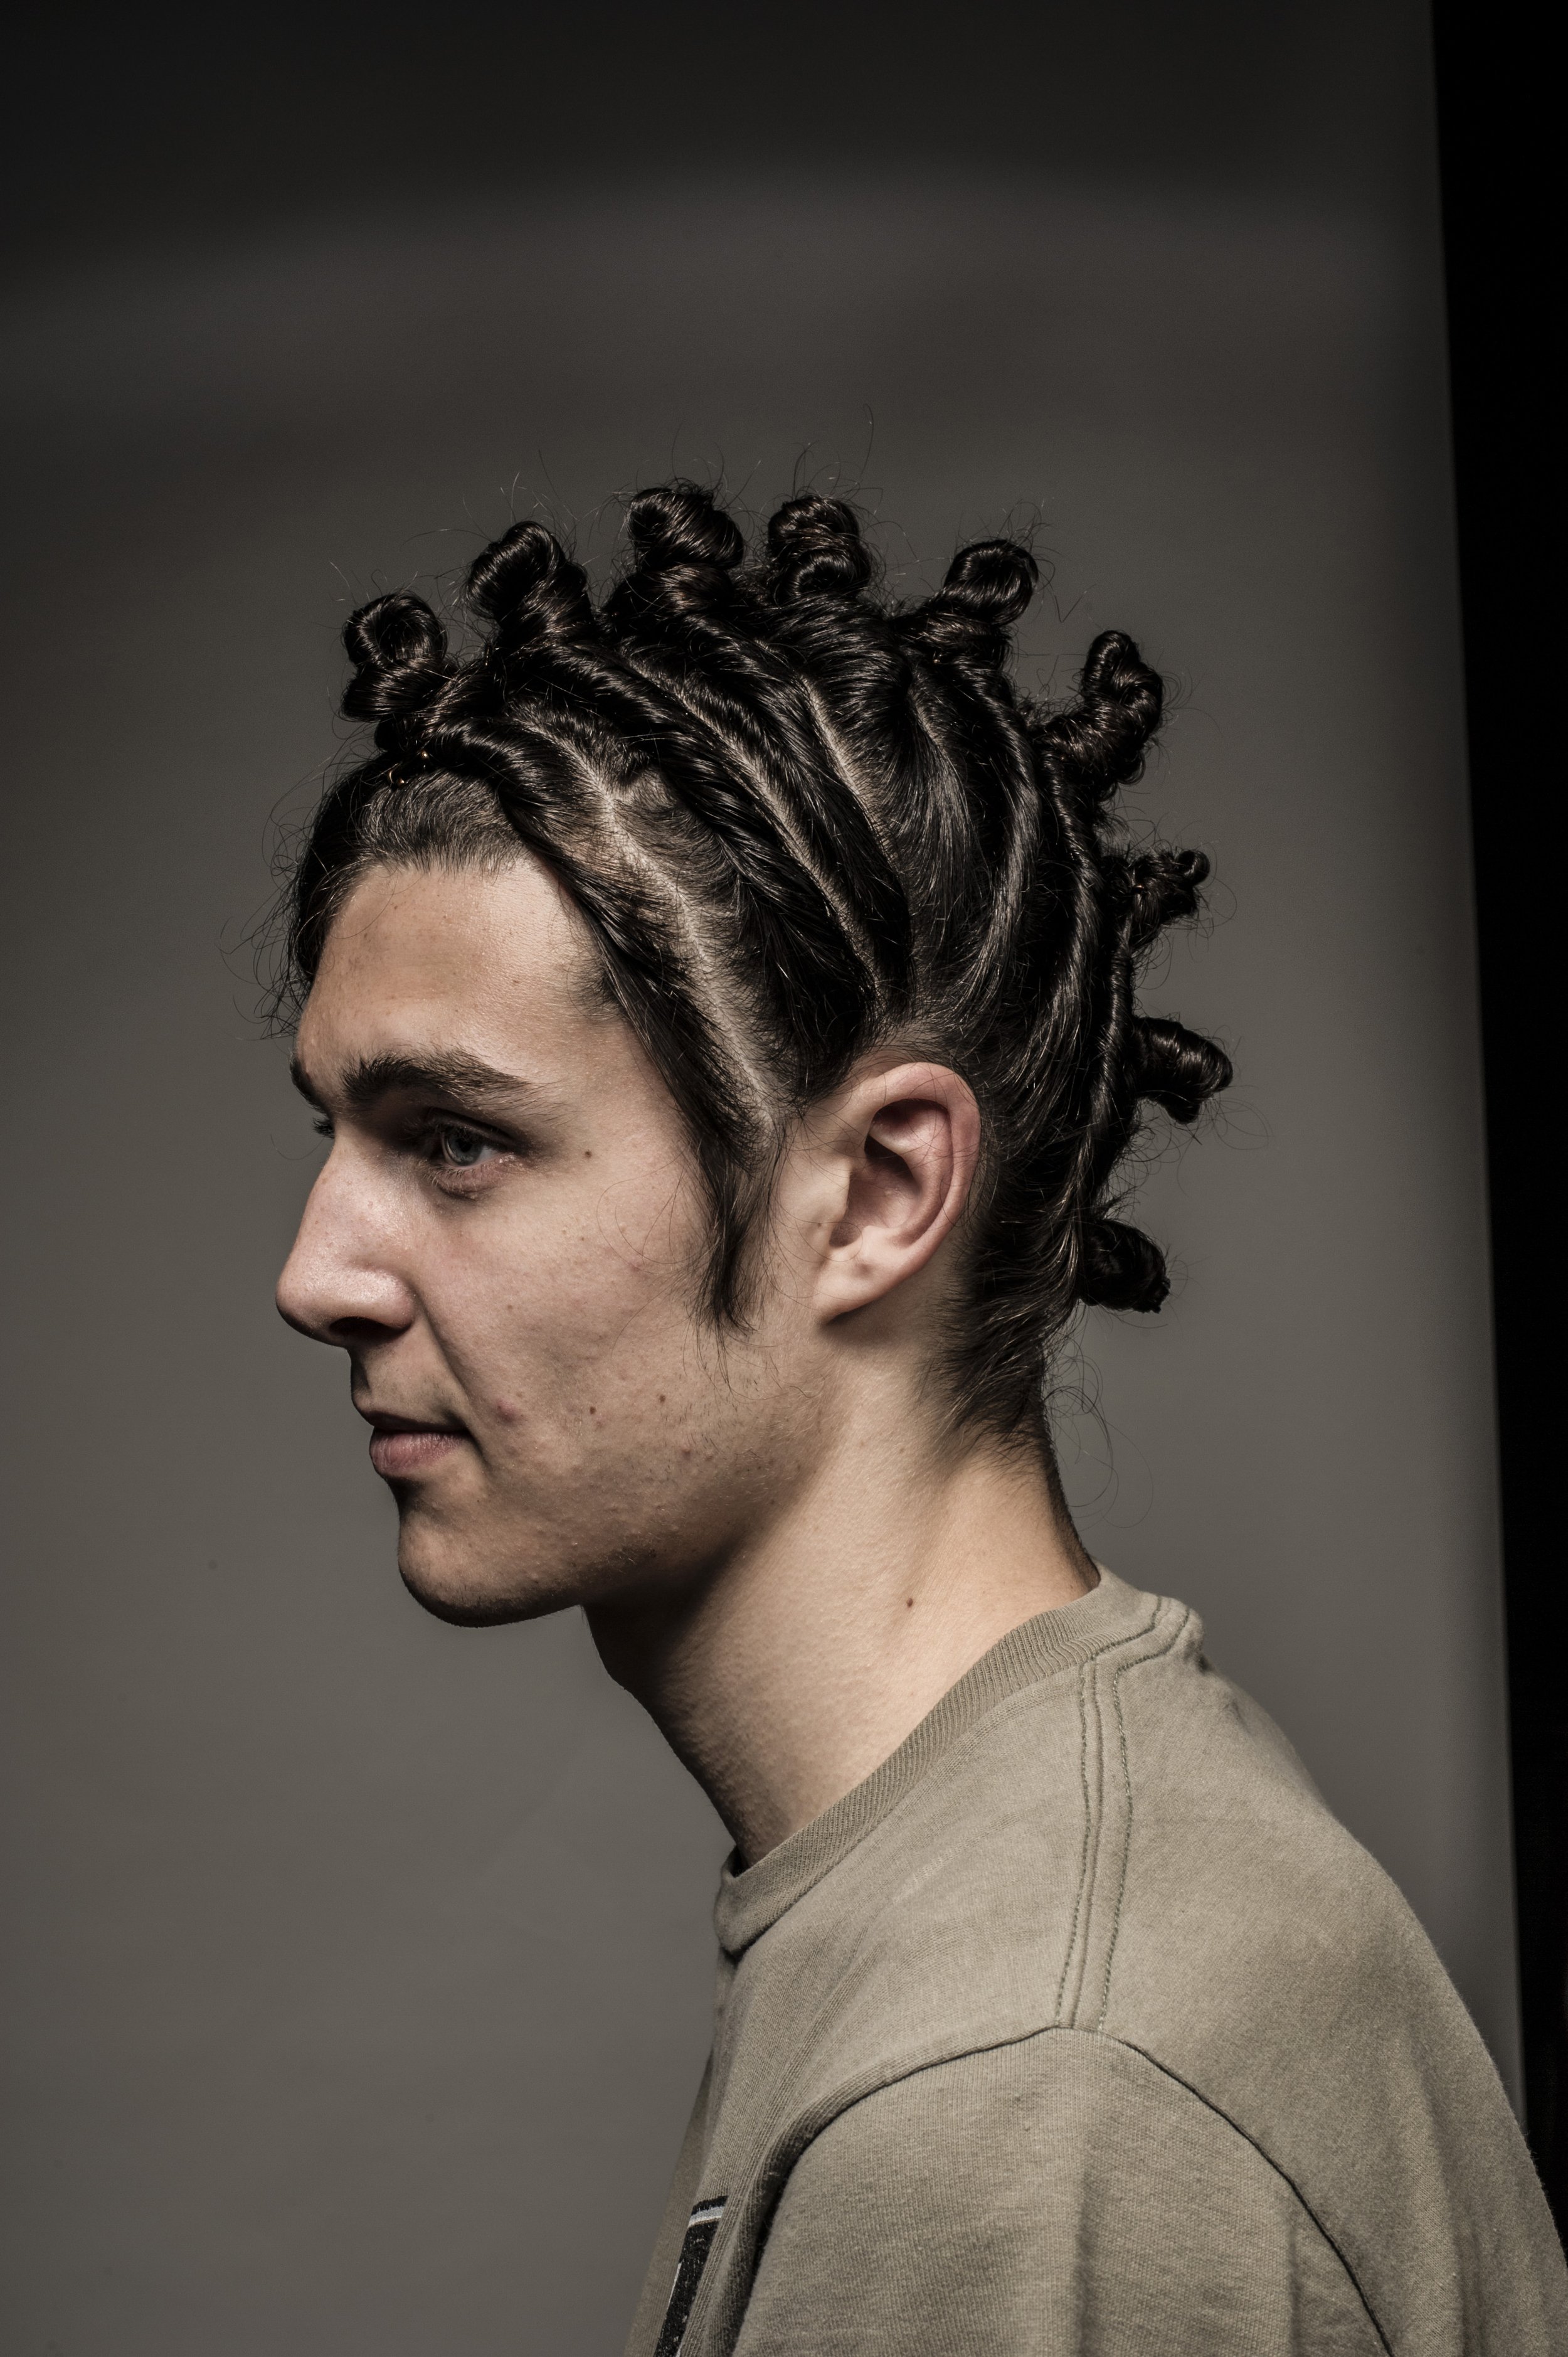 Profile of man with dark braided hair